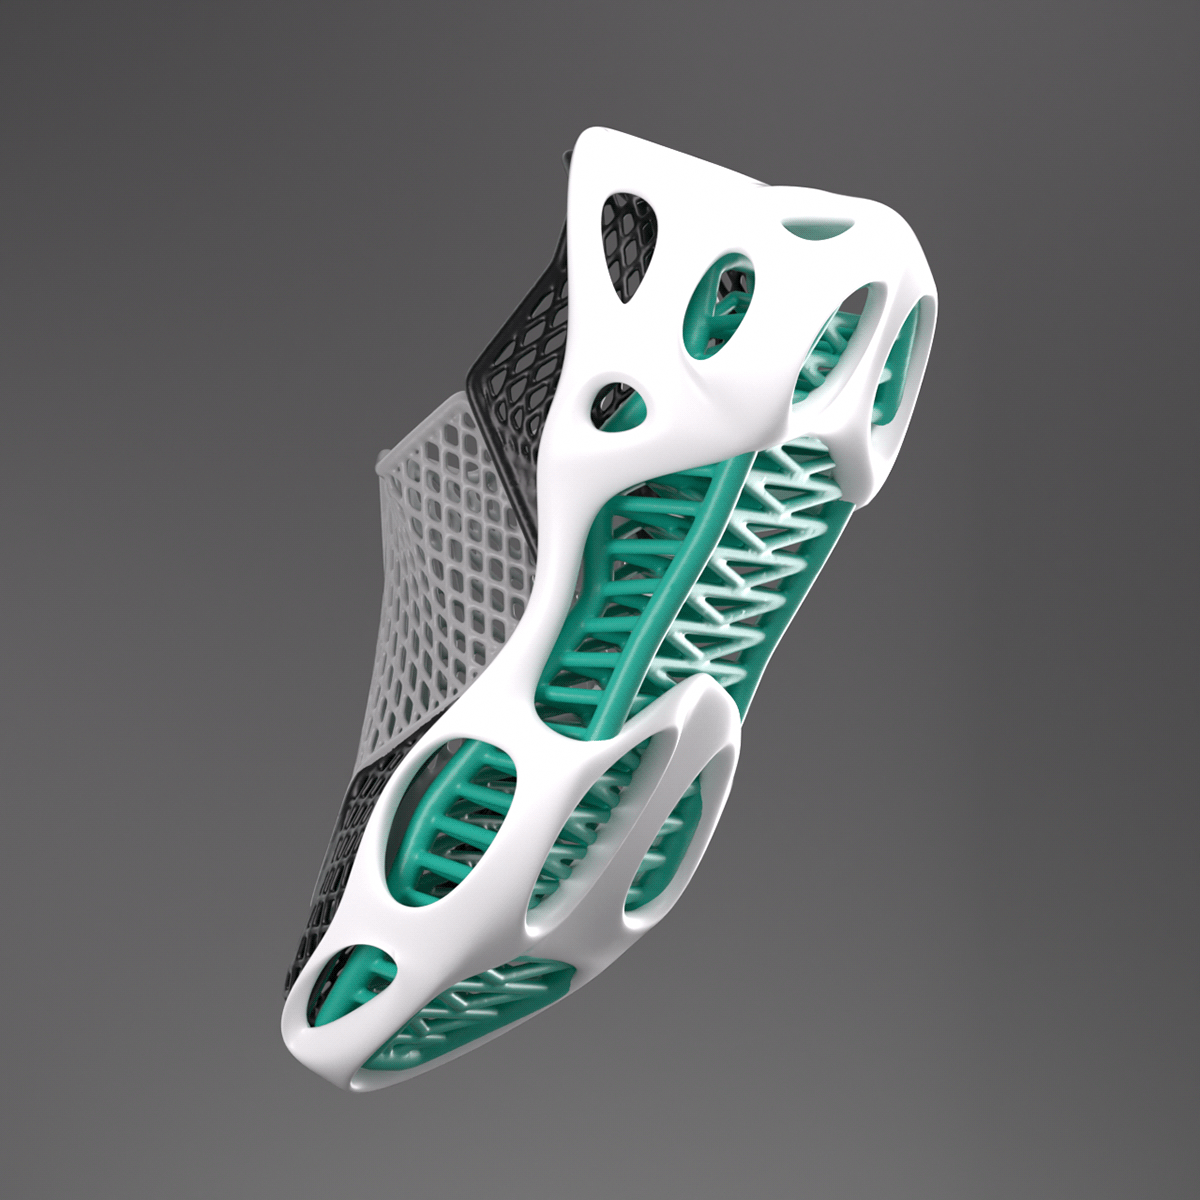 Sneaker Design footwear product design  sneakers sneaker art 3D printed Sneakers SNEAKER DESIGNER footwear design concept sneakerhead